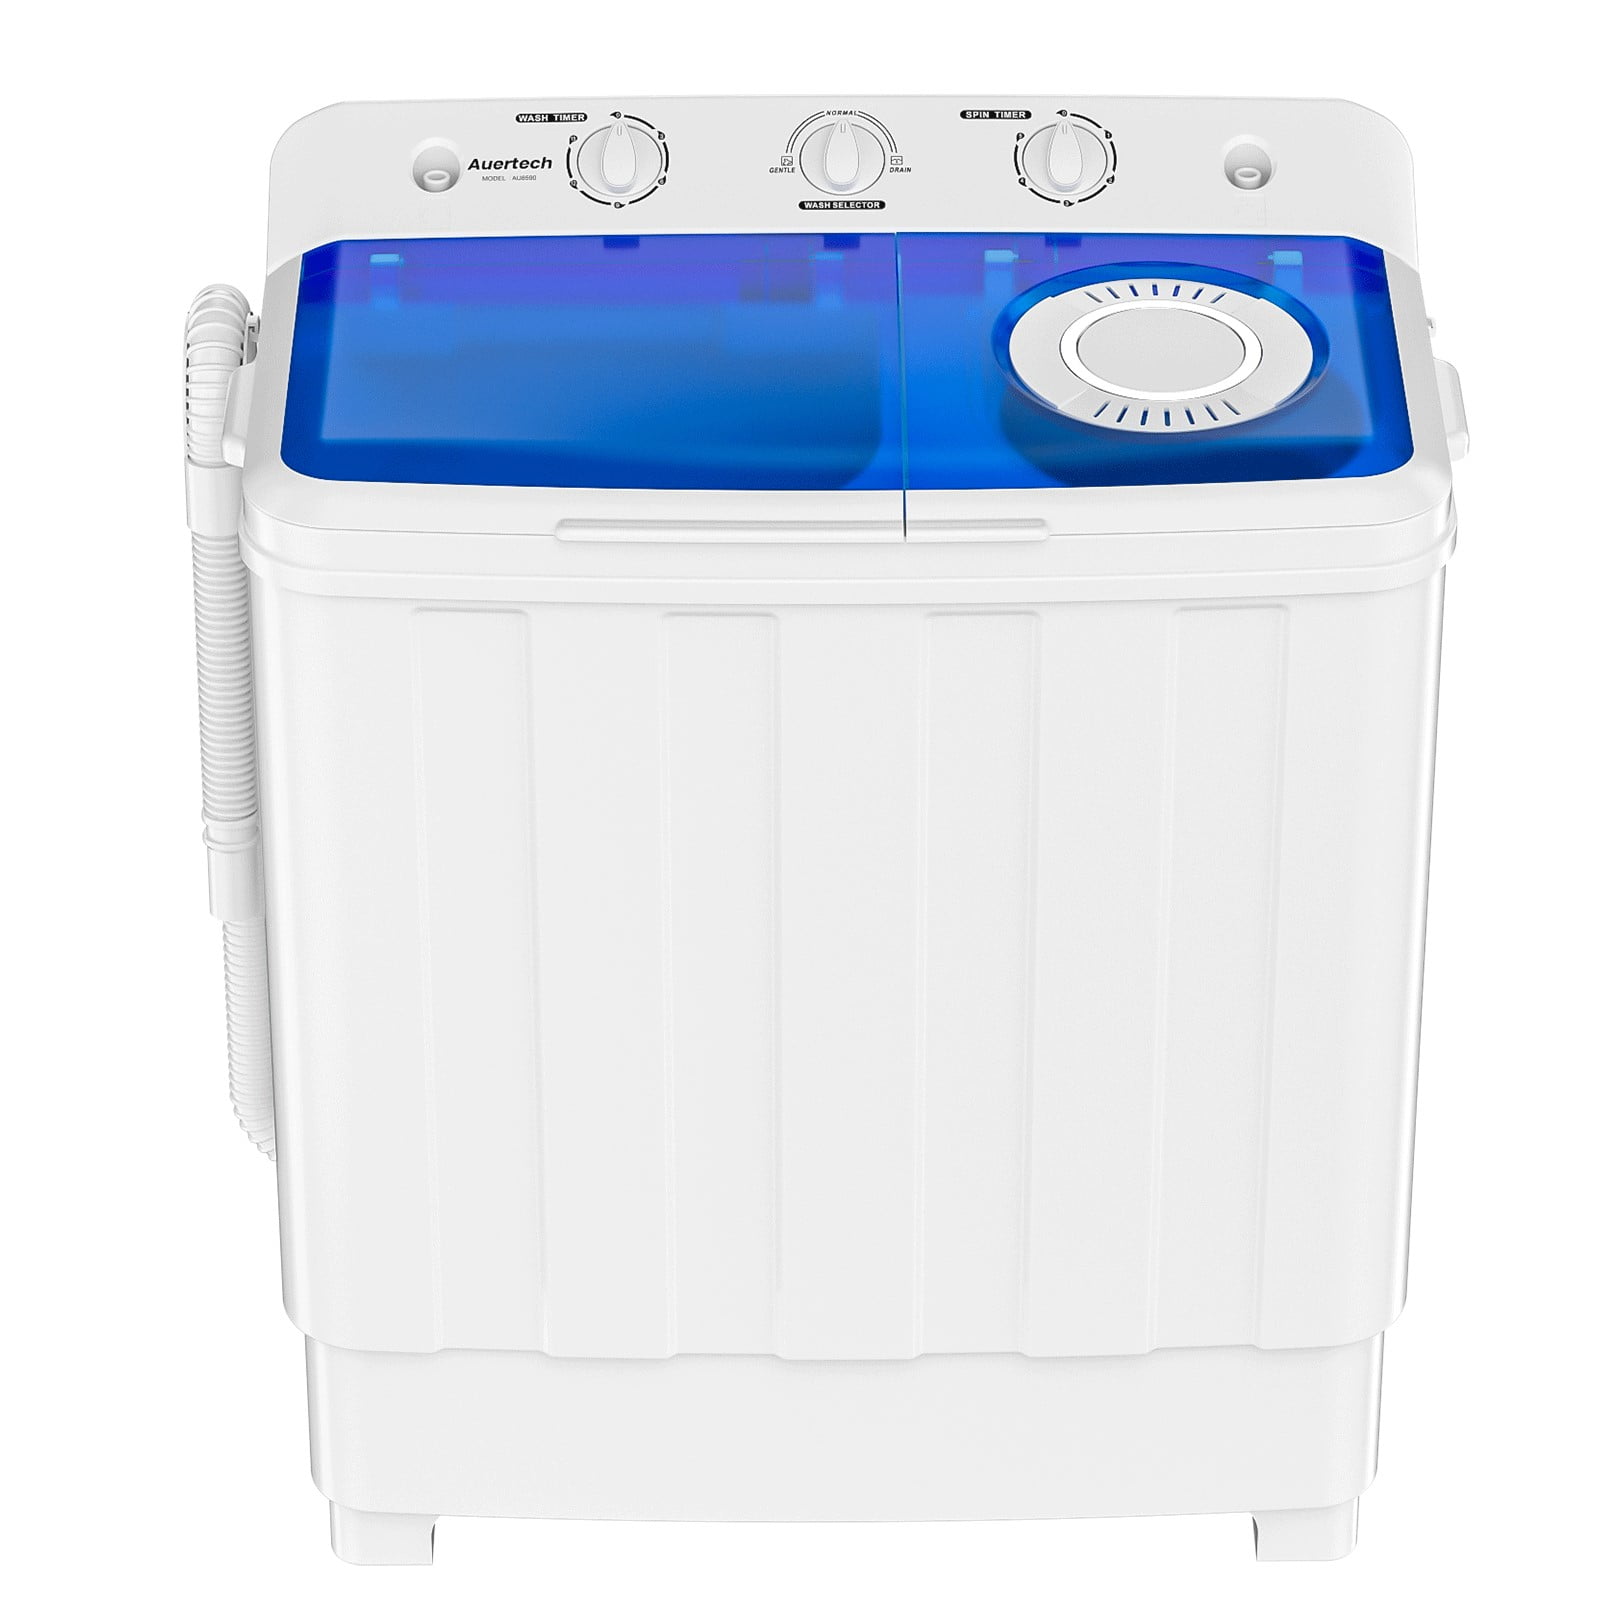 Auertech Portable Washing Machine 